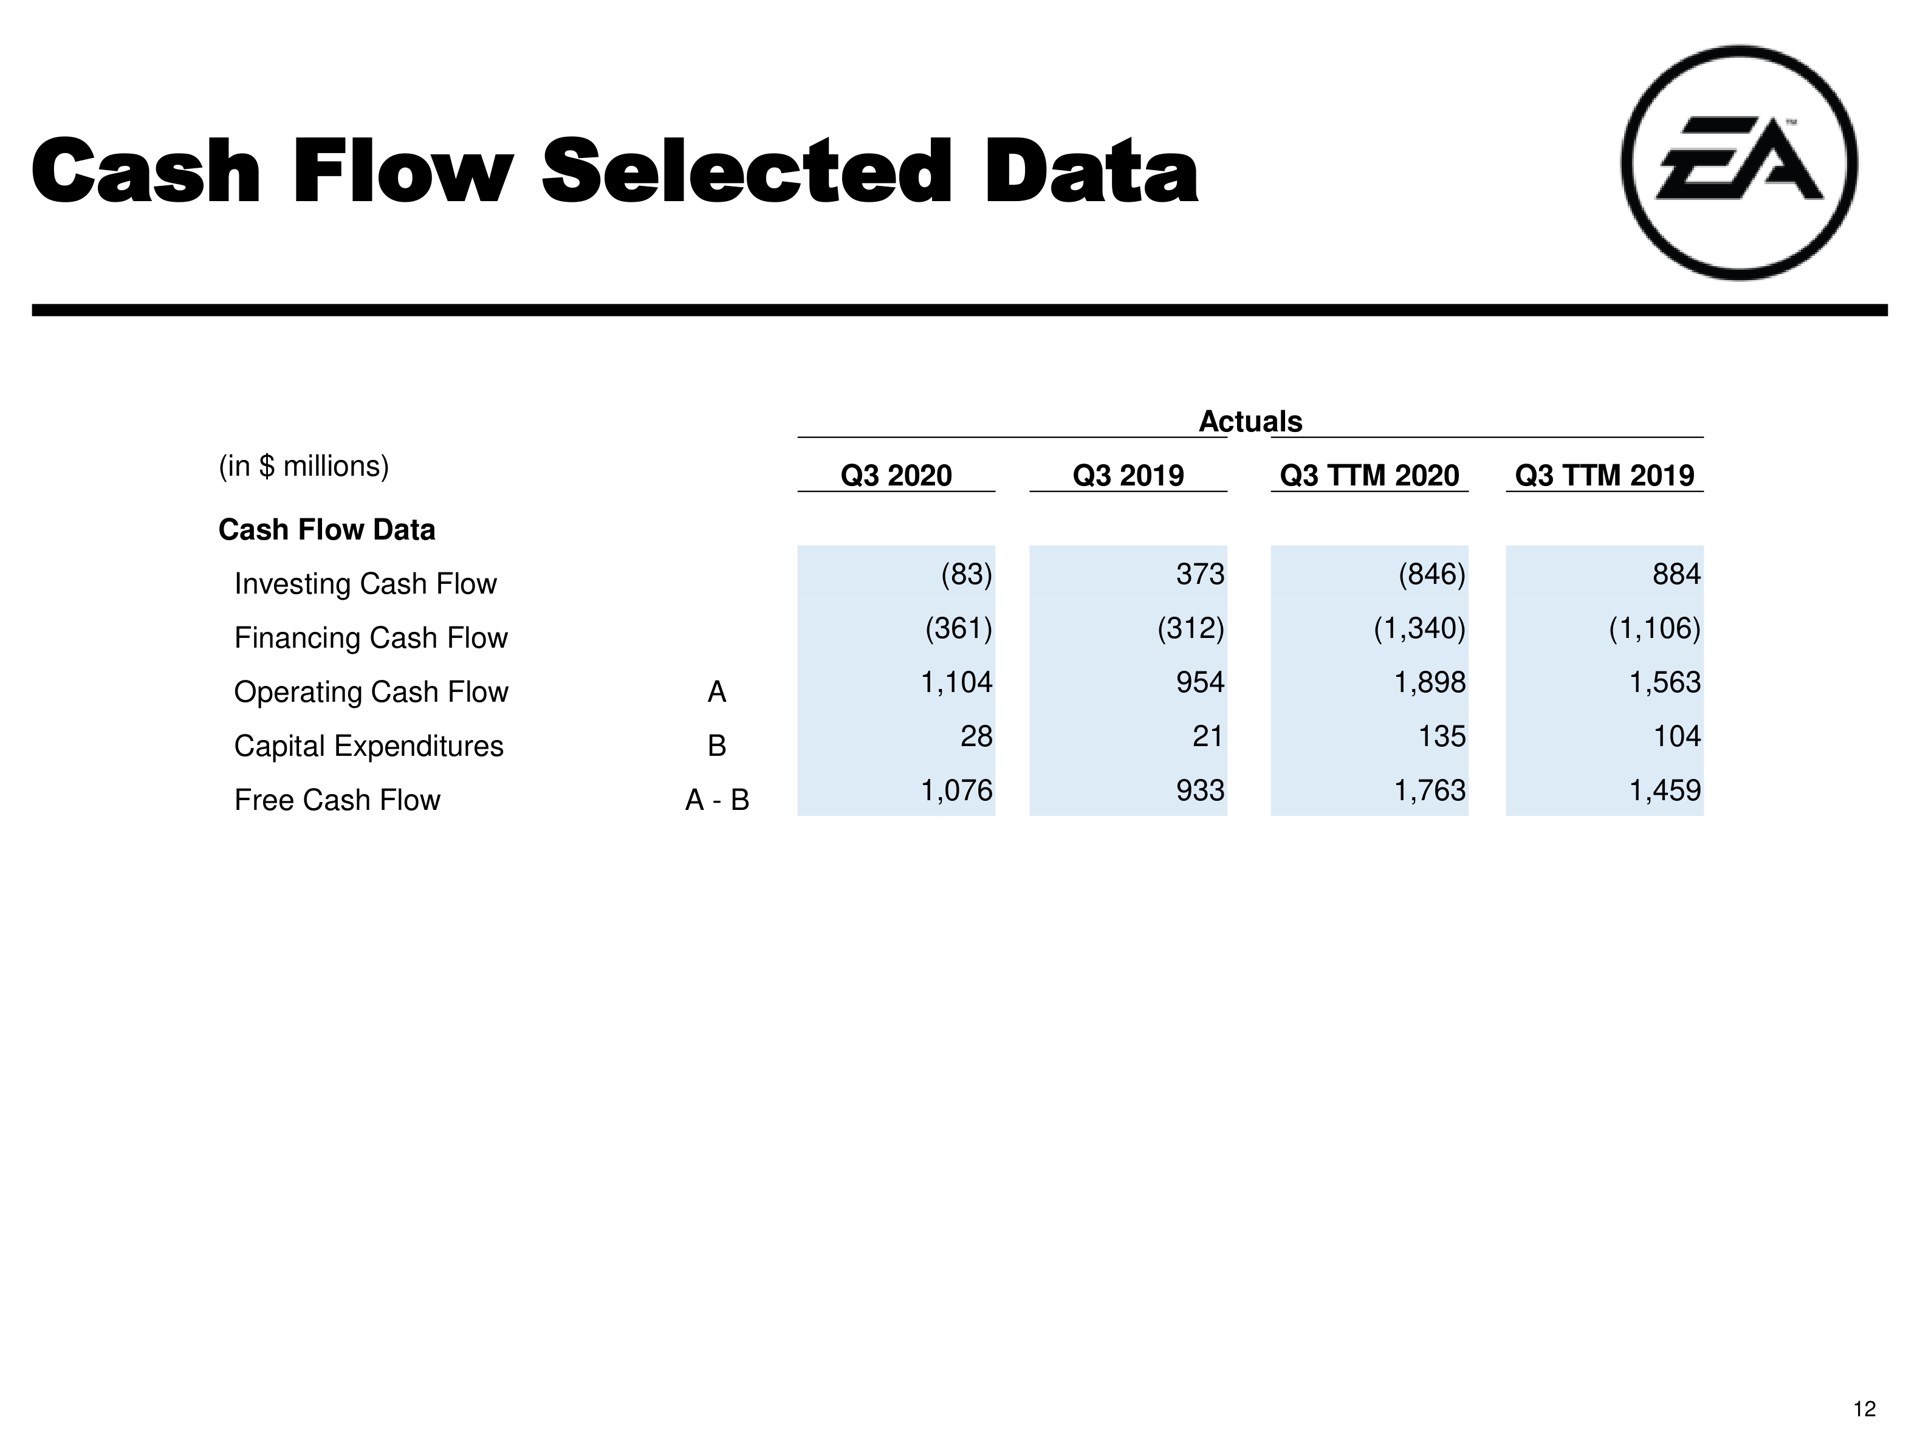 cash flow selected data | Electronic Arts